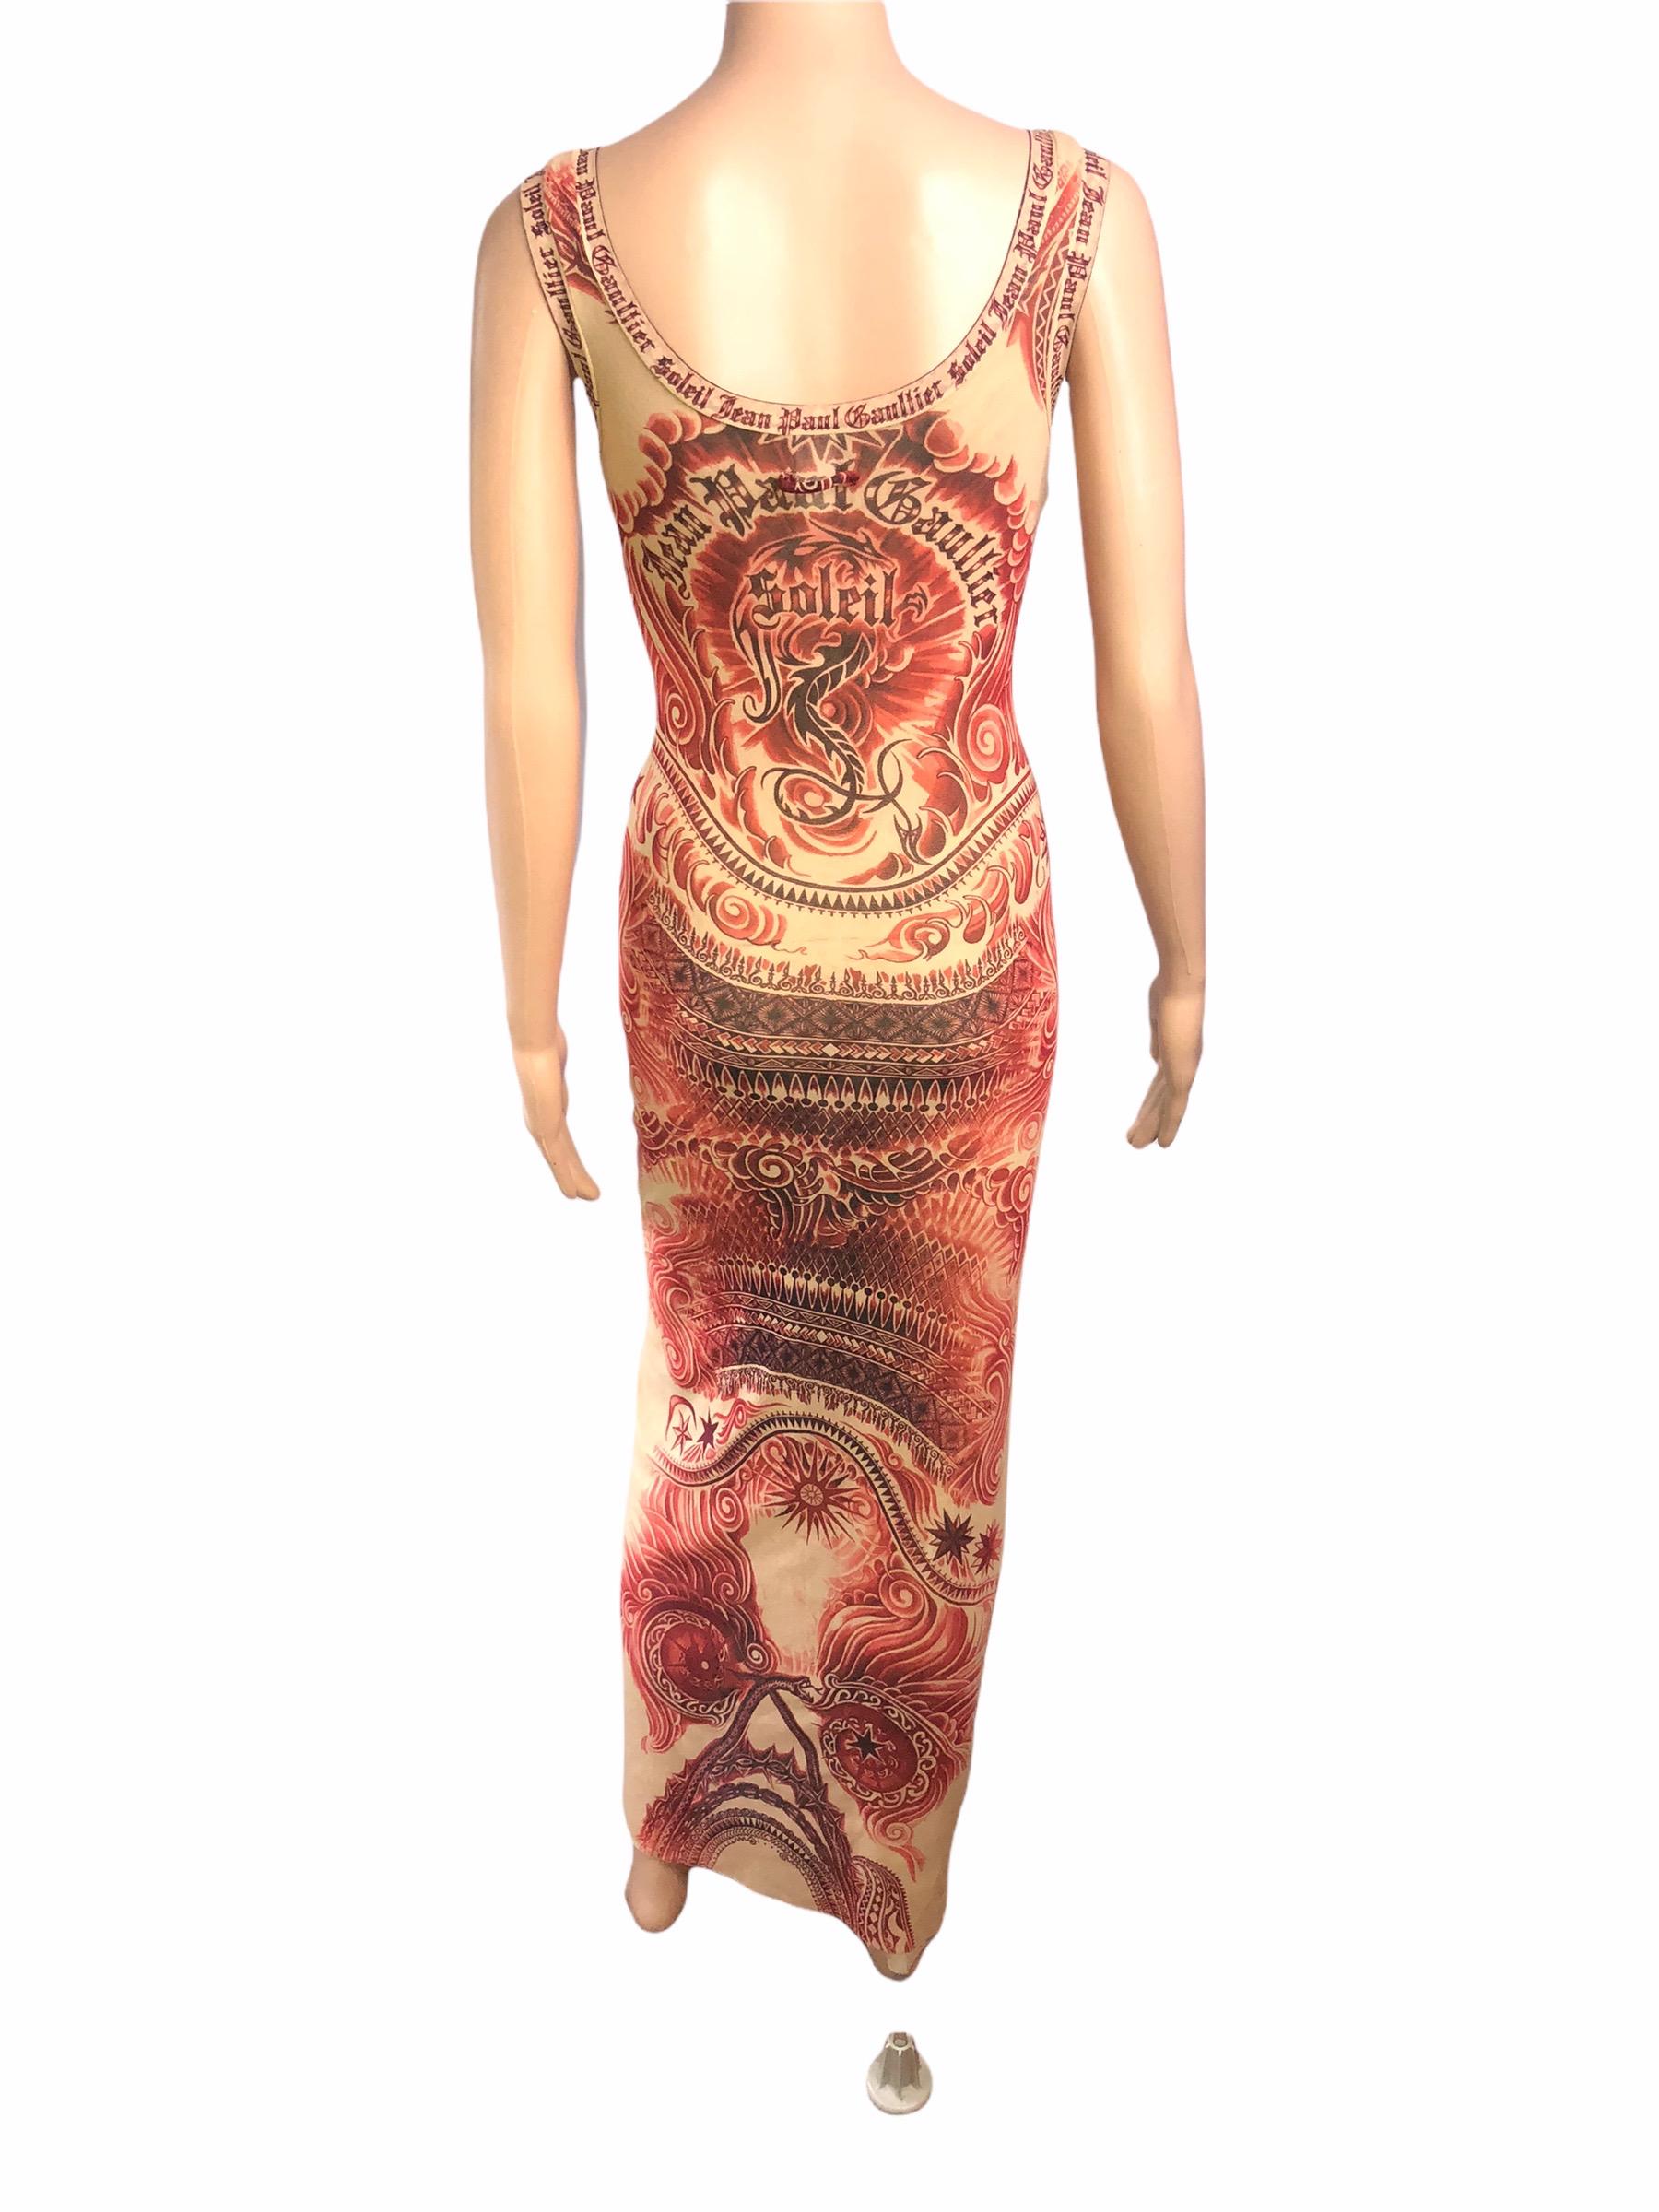 Women's or Men's Jean Paul Gaultier Soleil Vintage Tattoo Bodycon Mesh Bolero Dress 2 Piece Set For Sale